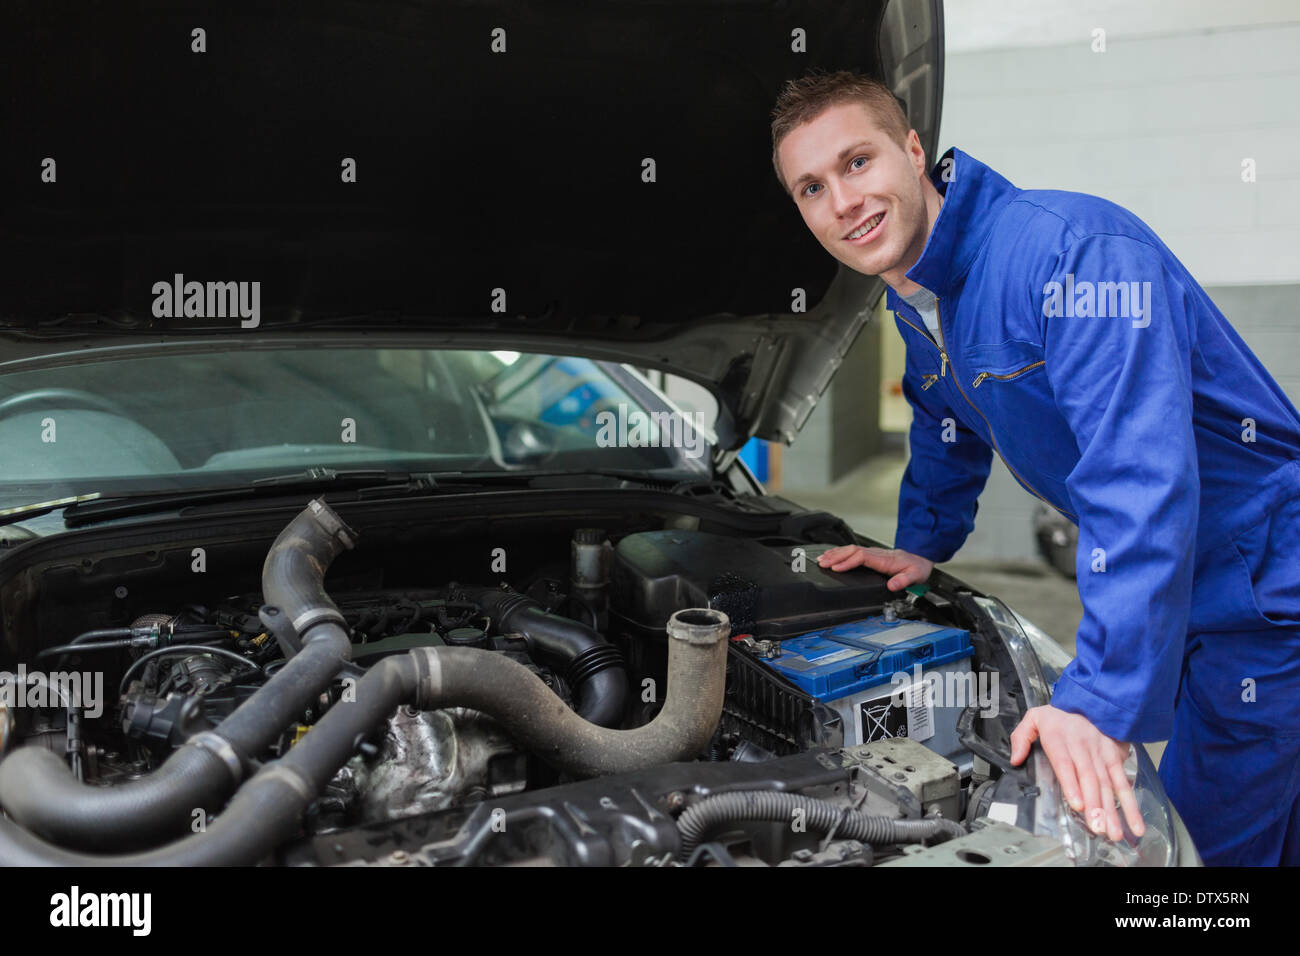 mechaniker-arbeiten-unter-motorhaube-stockfoto-bild-66958185-alamy